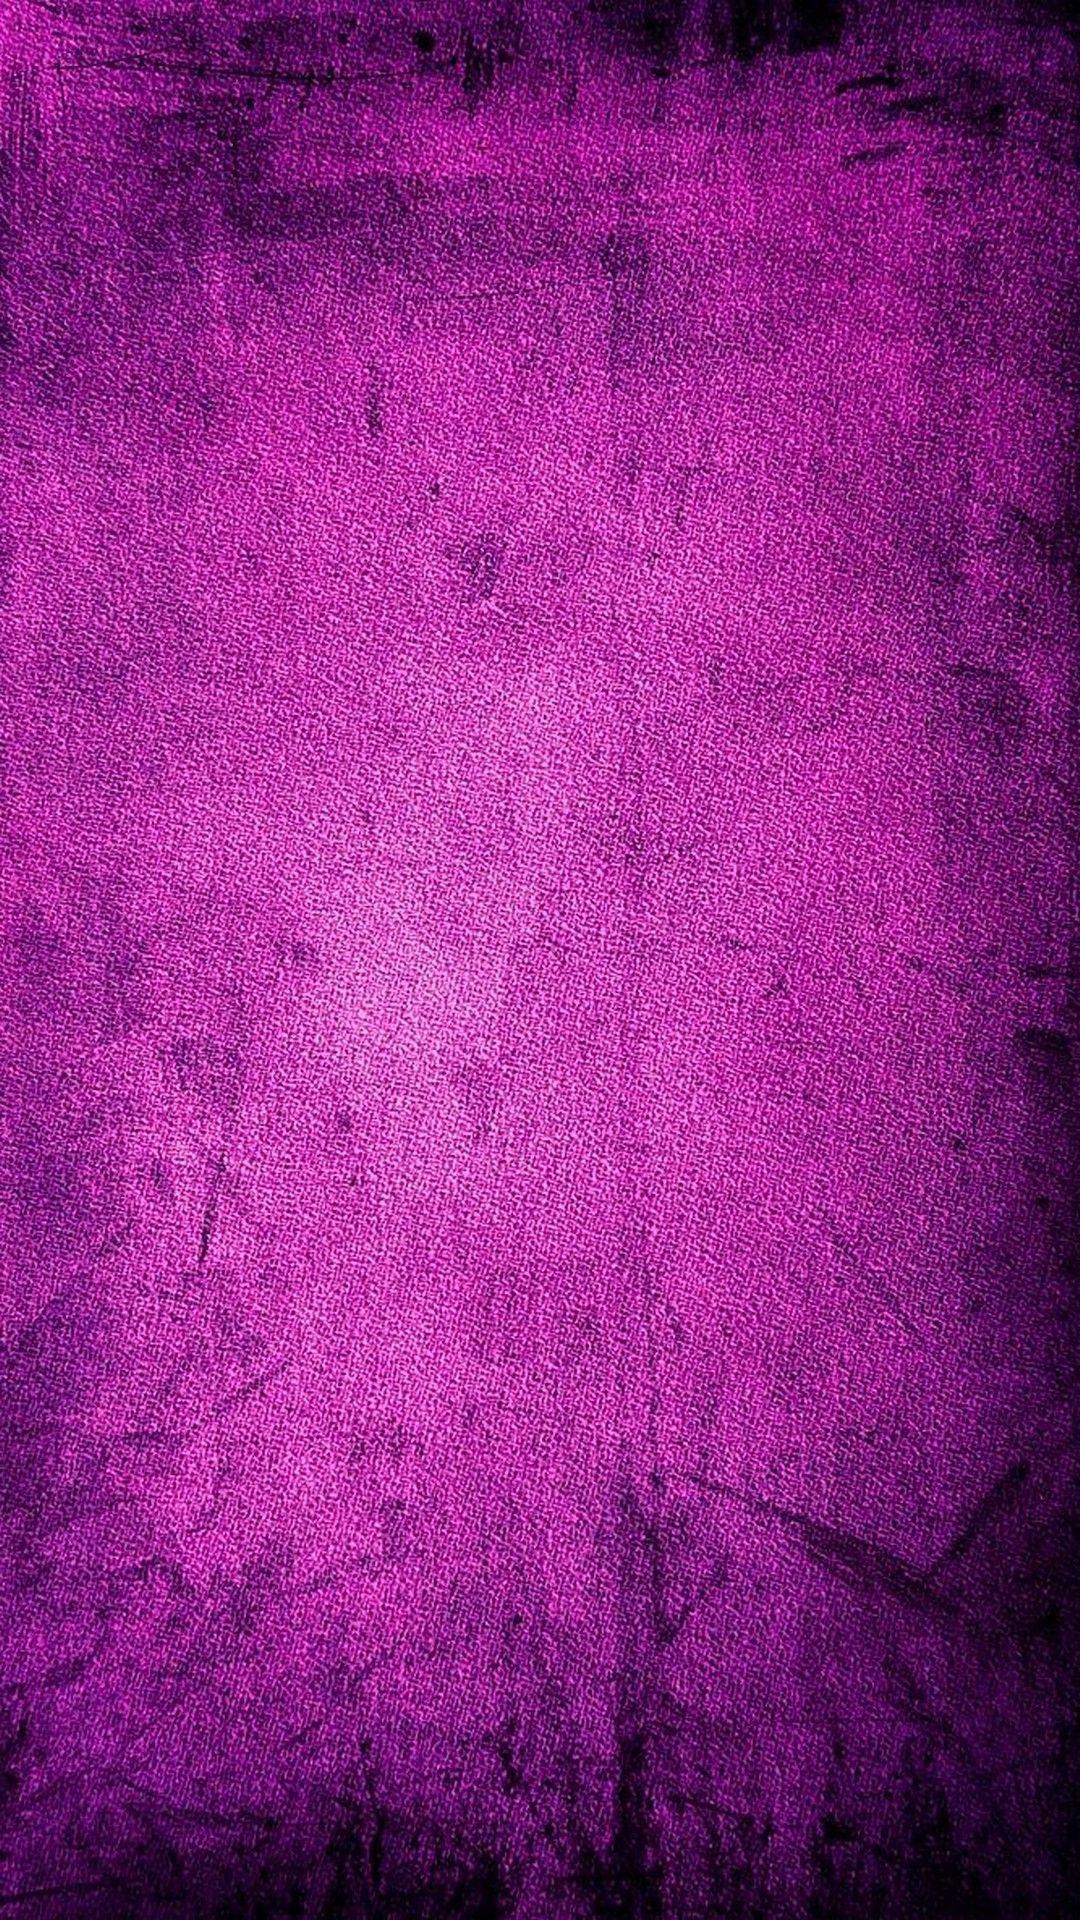 Purple Vintage Fabric iPhone Wallpaper. iPhoneWallpaper